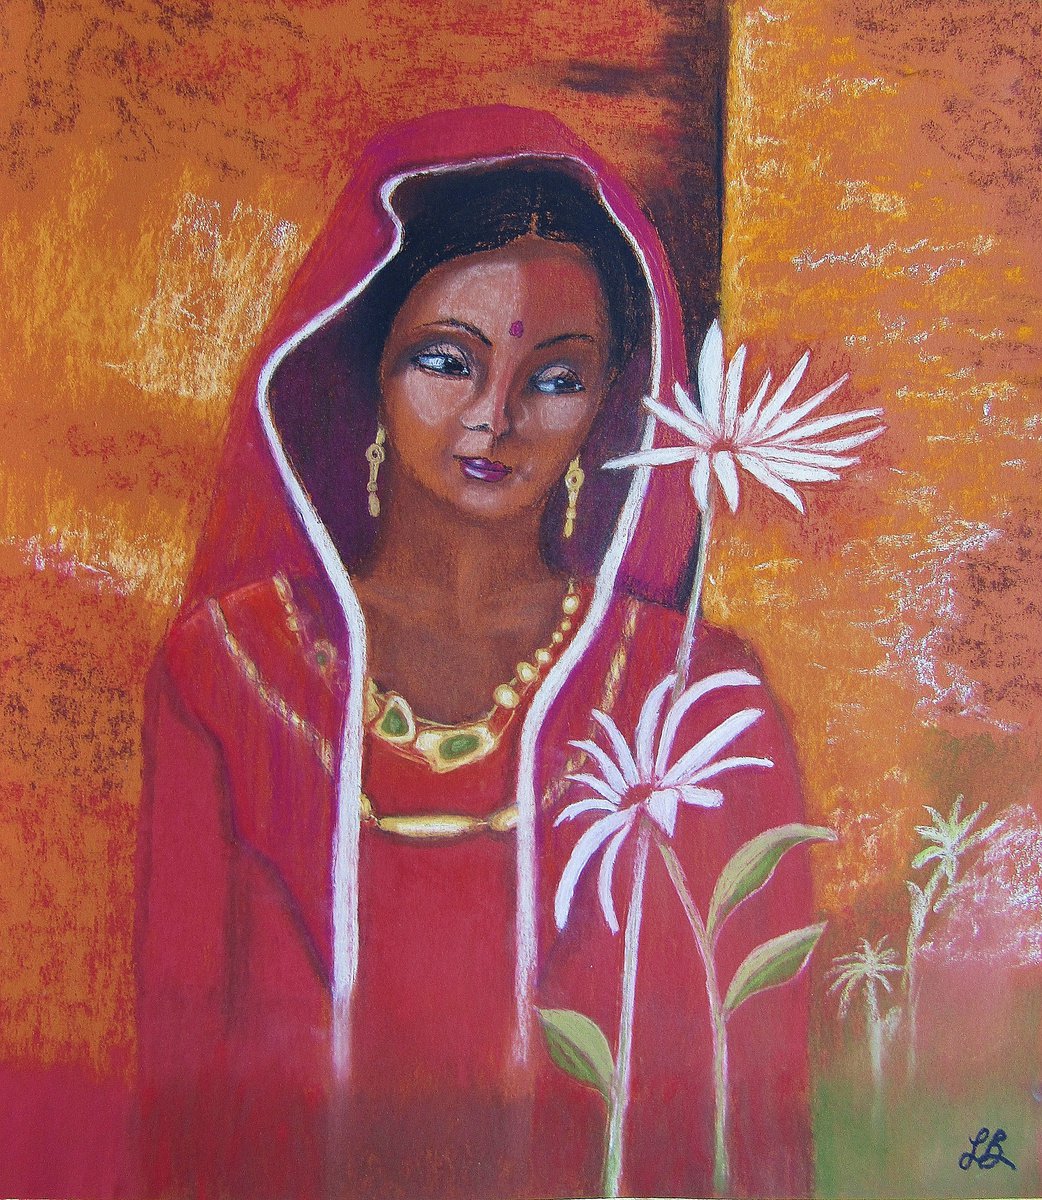 Woman from India by Linda Burnett